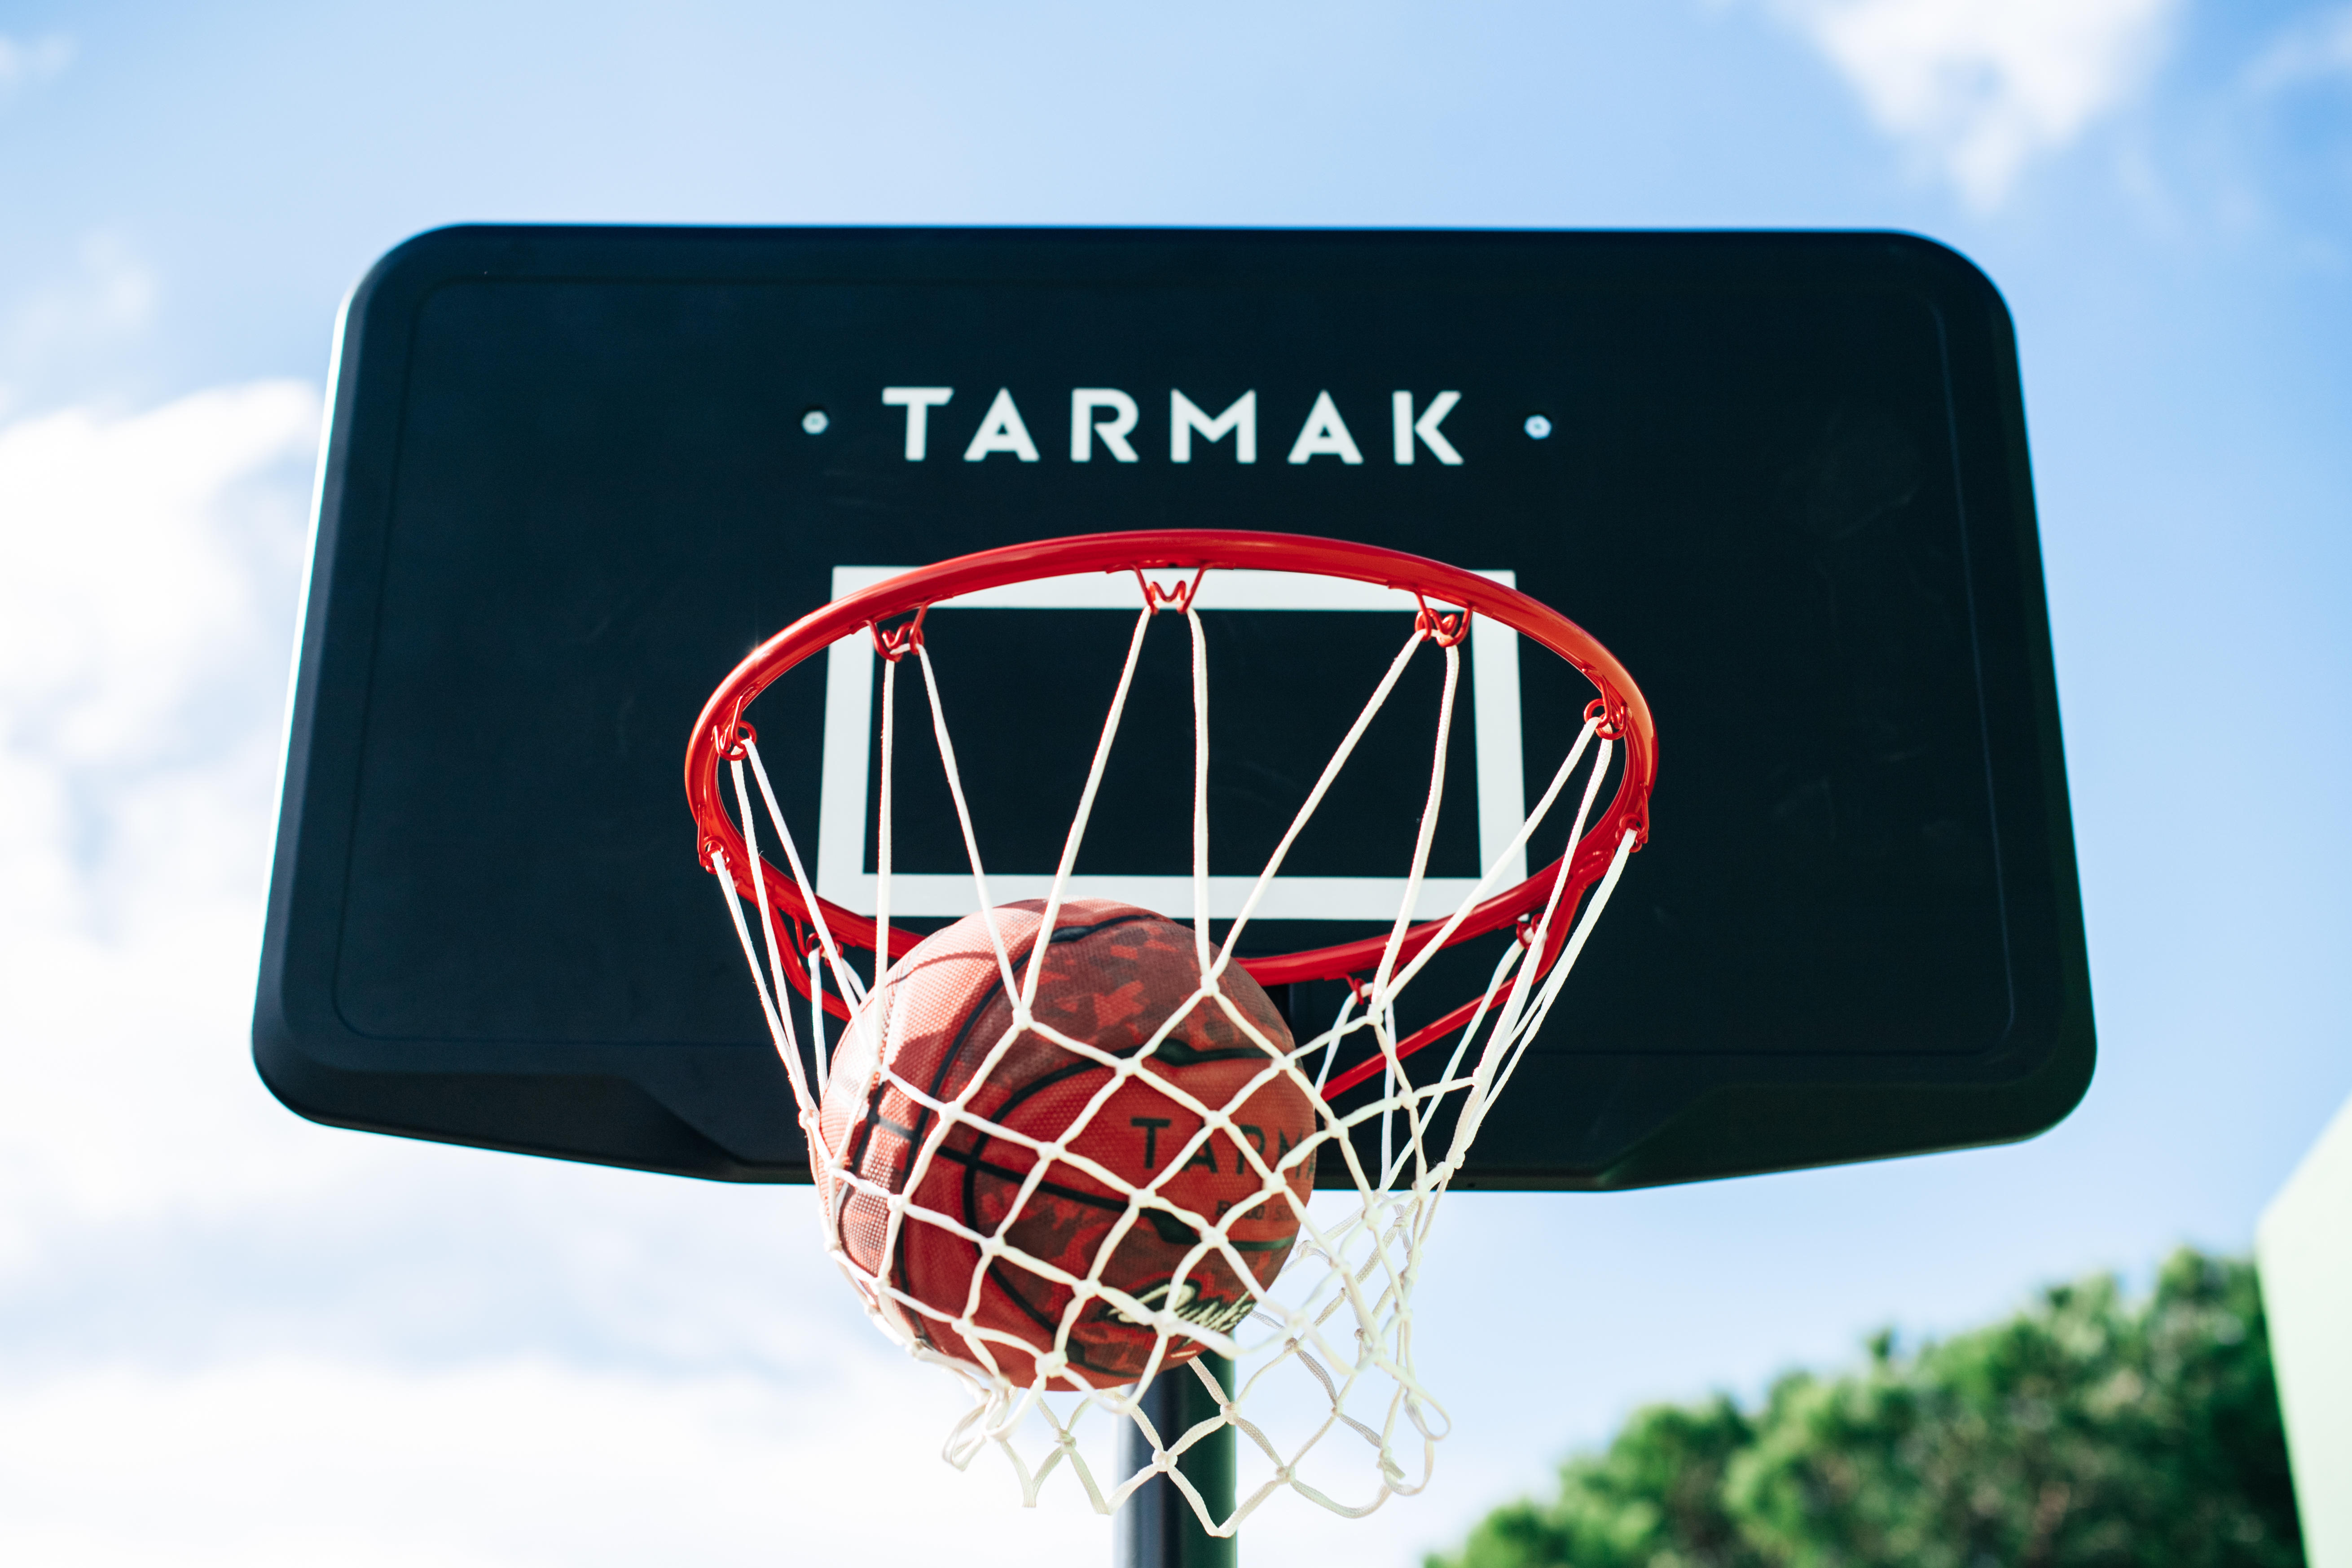 Basketball Hoop with Adjustable Stand - B 100 Black - TARMAK